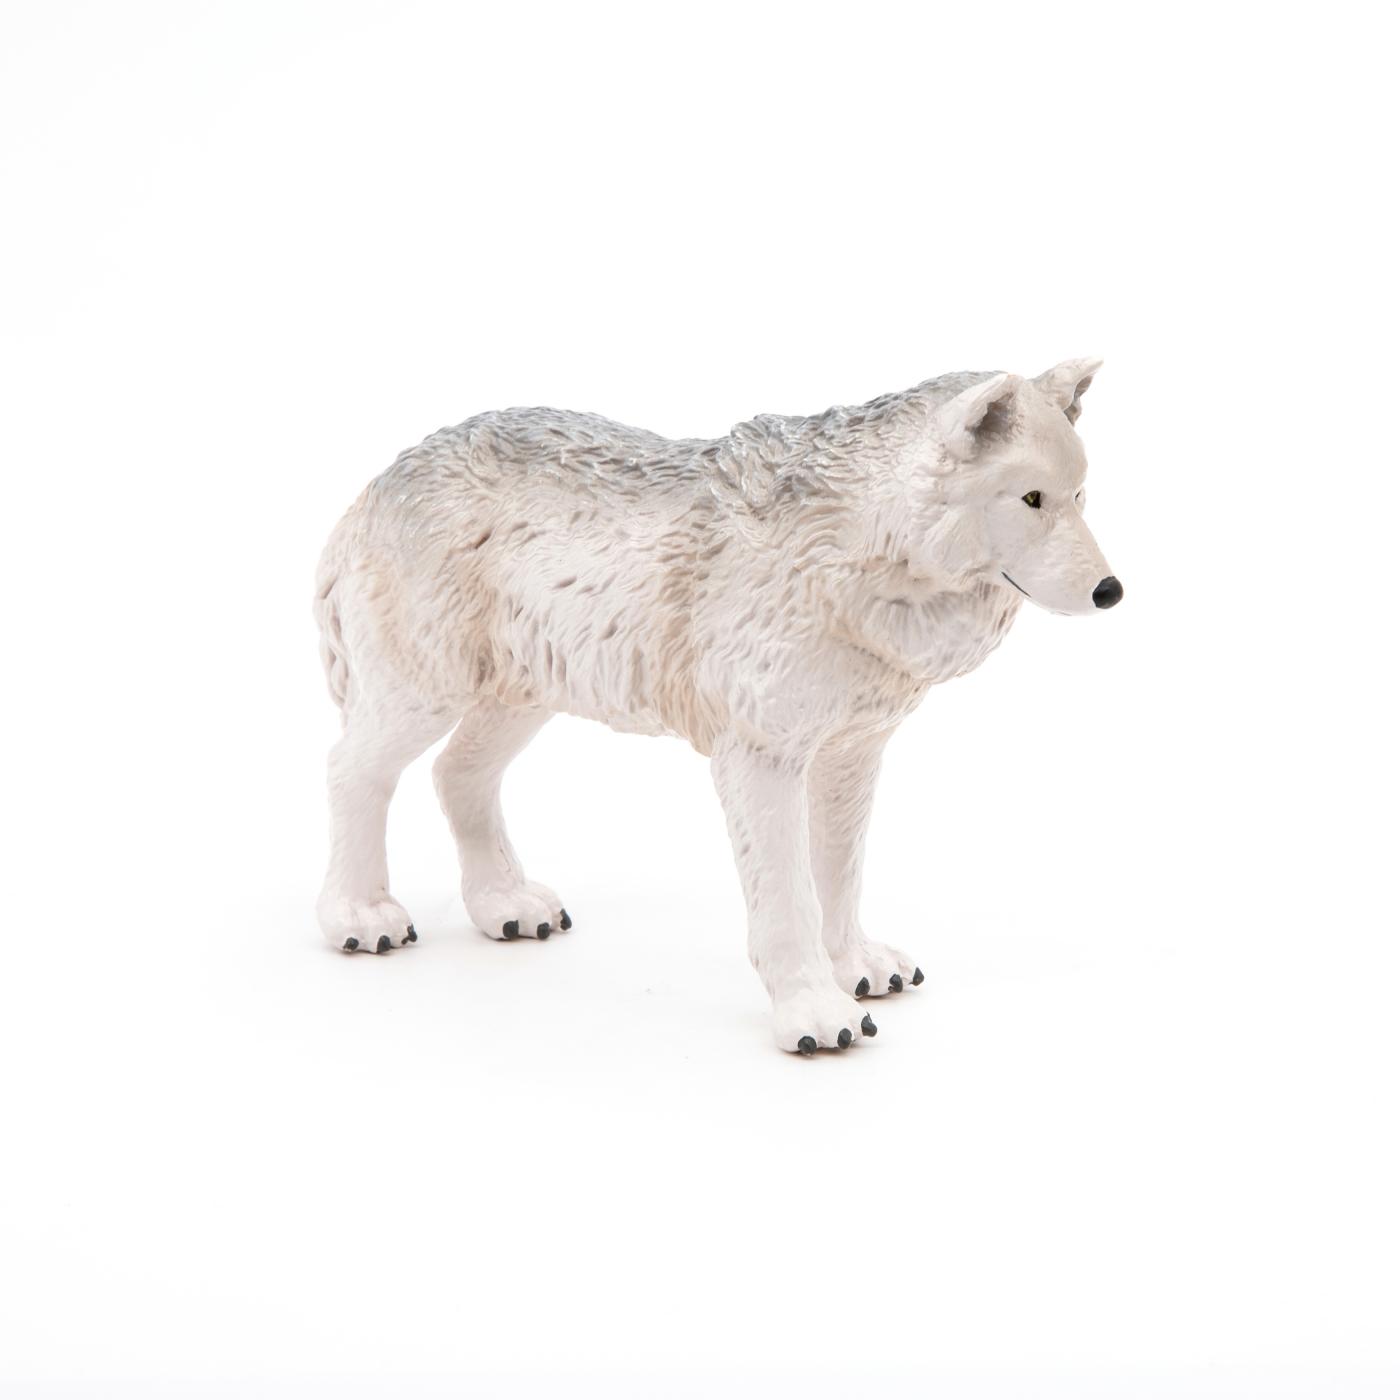 PAPO Wild Animal Kingdom Polar Wolf Figure 50195 New 